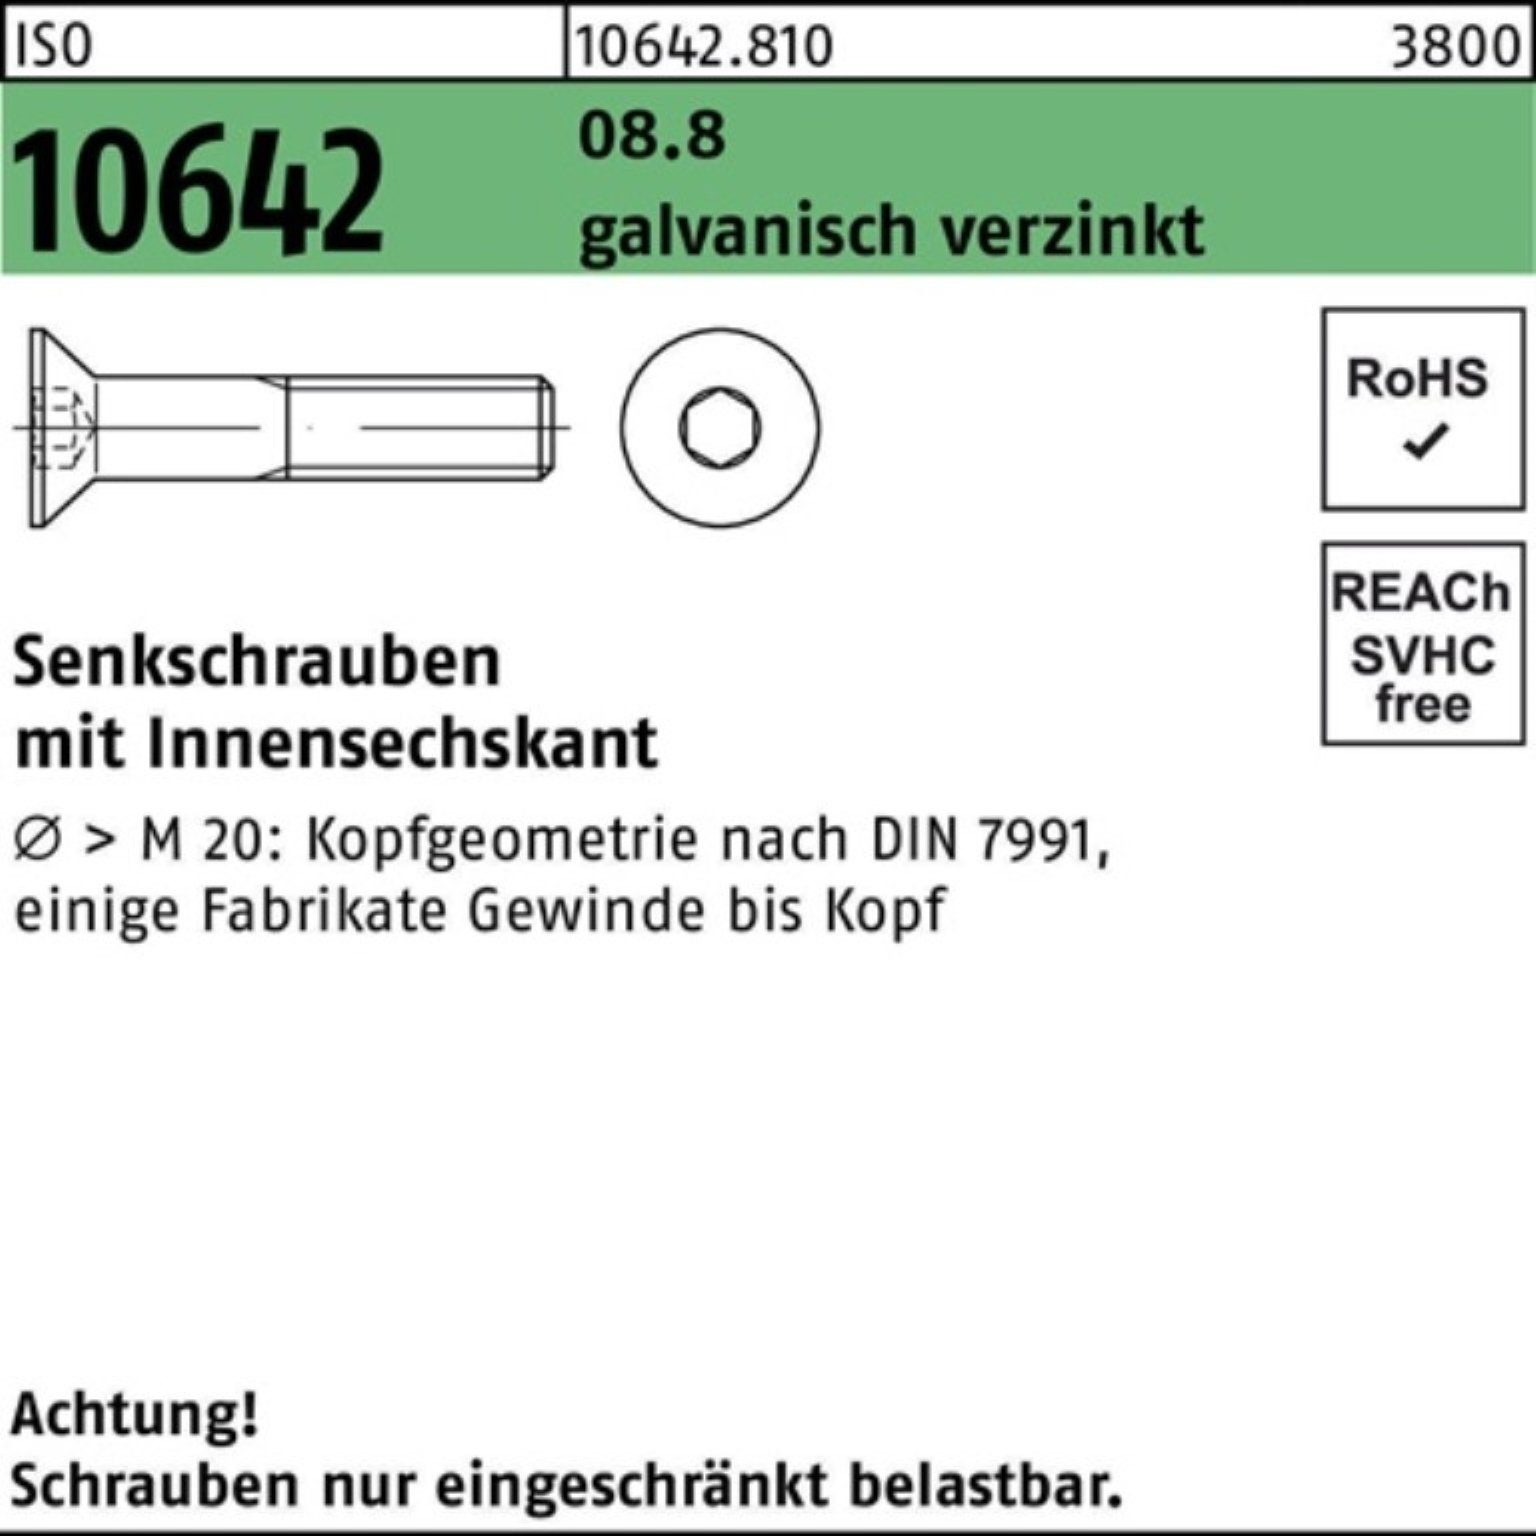 M8x Senkschraube 12 200 Senkschraube 8.8 galv.verz. 200er 10642 Innen-6kt Reyher ISO Pack